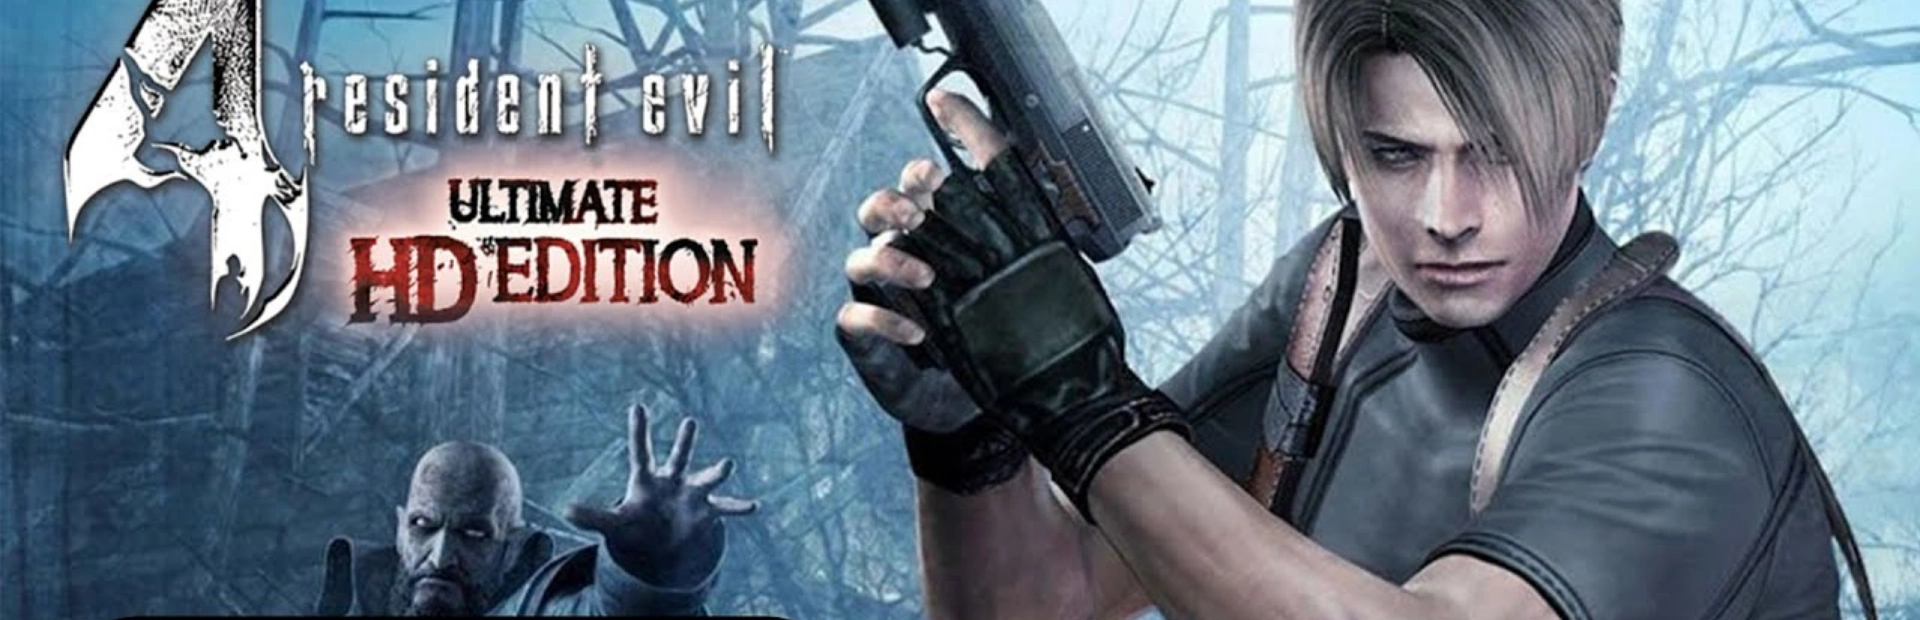 Resident Evil 4 Ultimate HD Editionbanner1